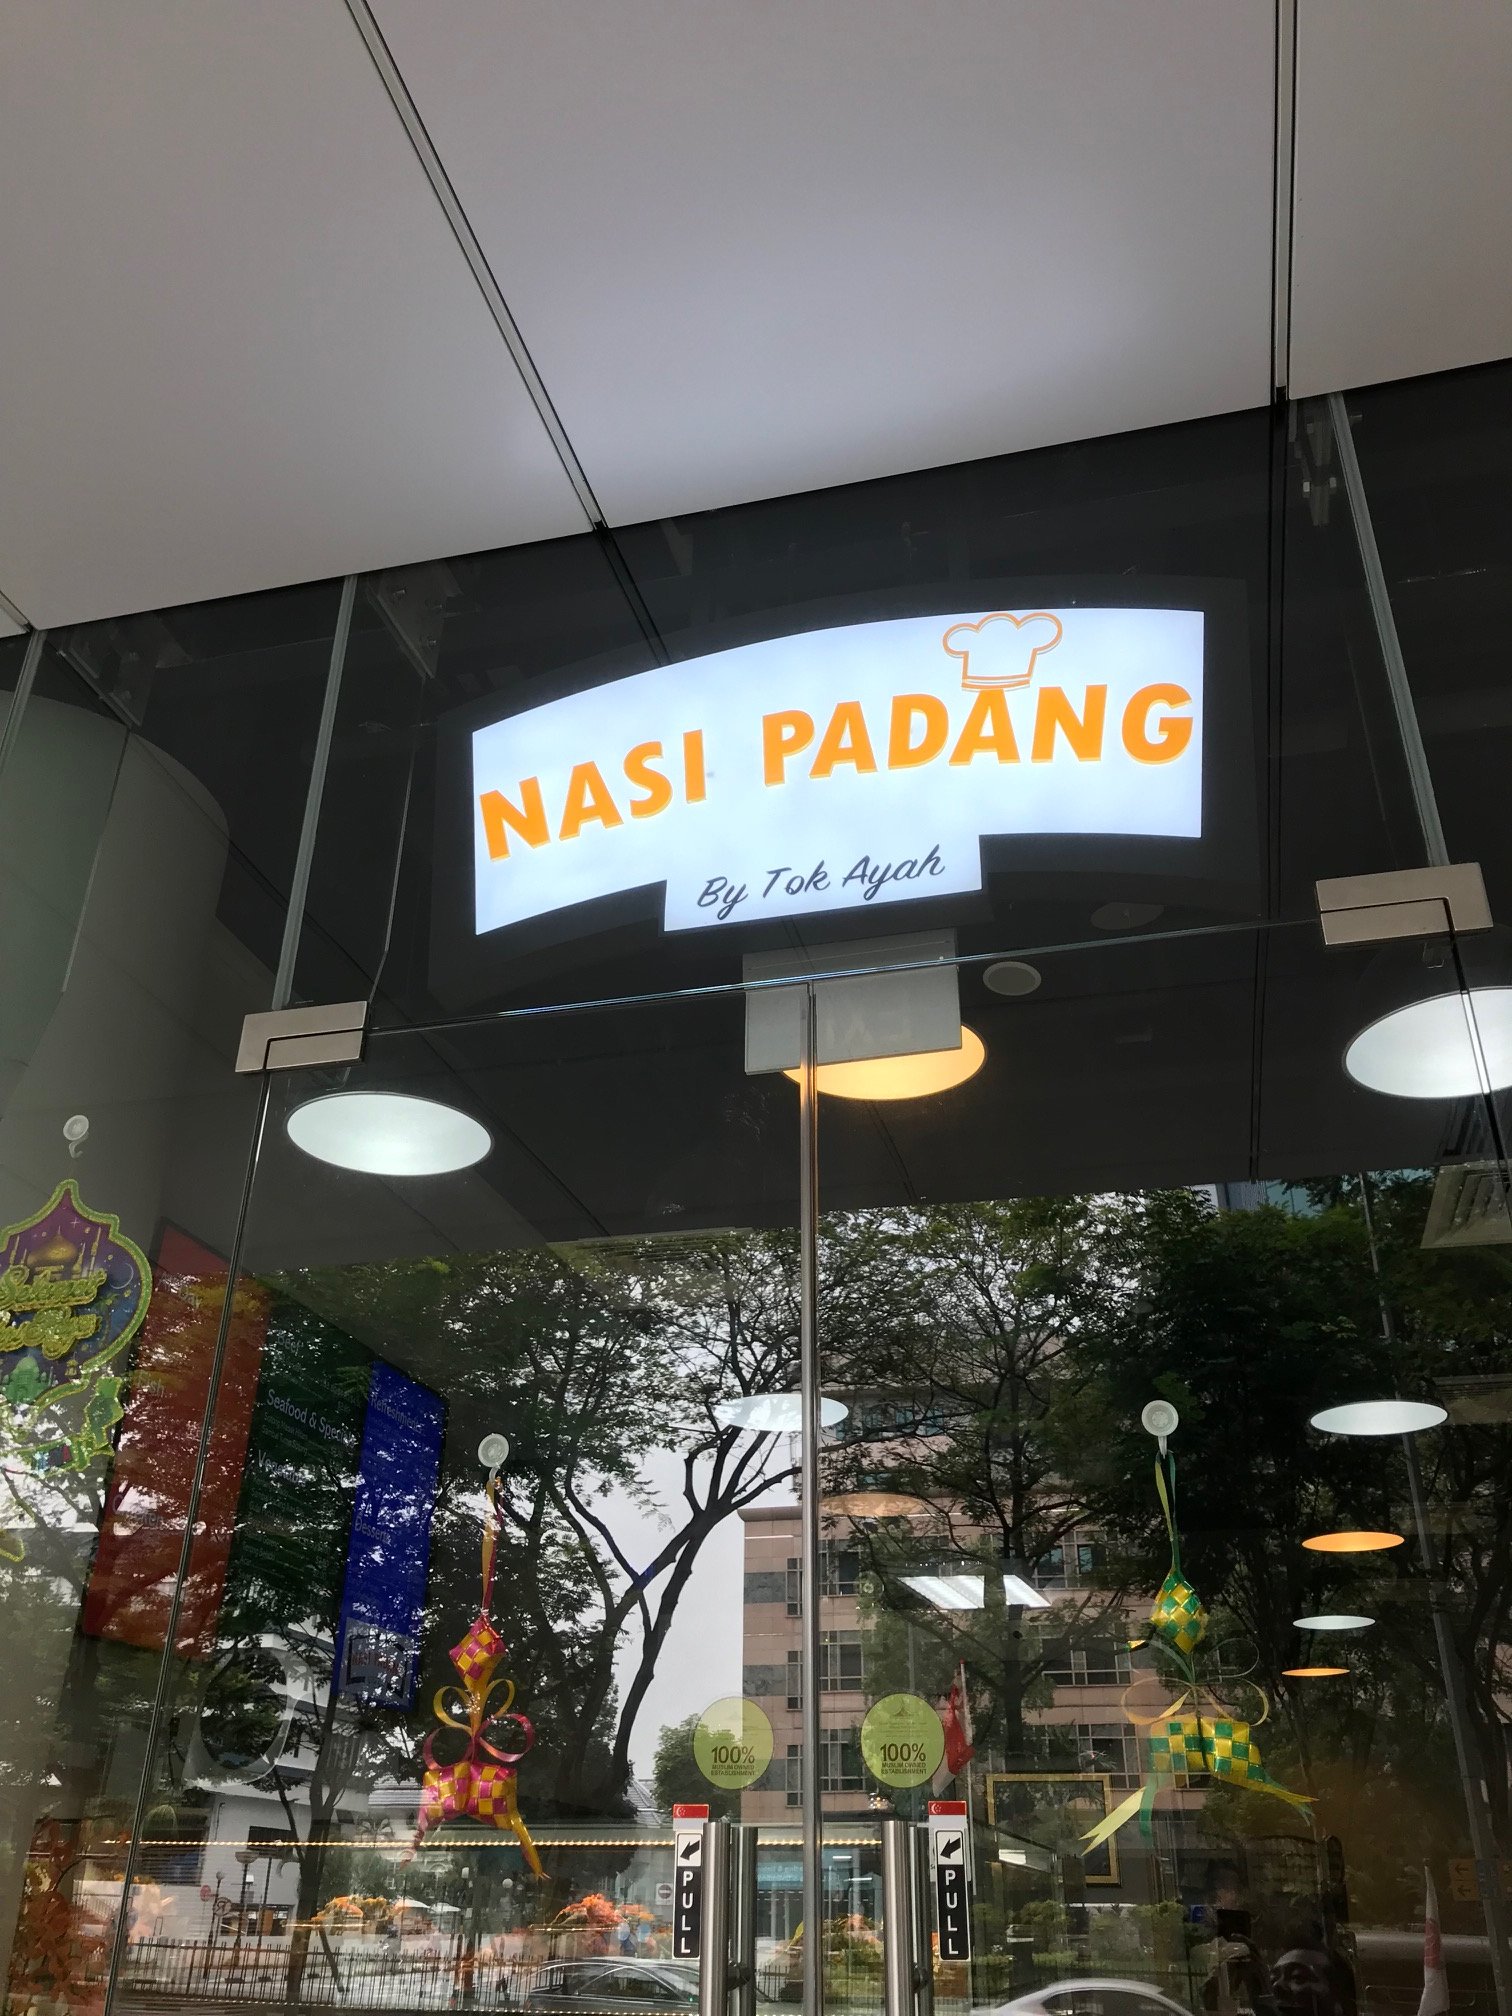 nasi Padang by tok ayah